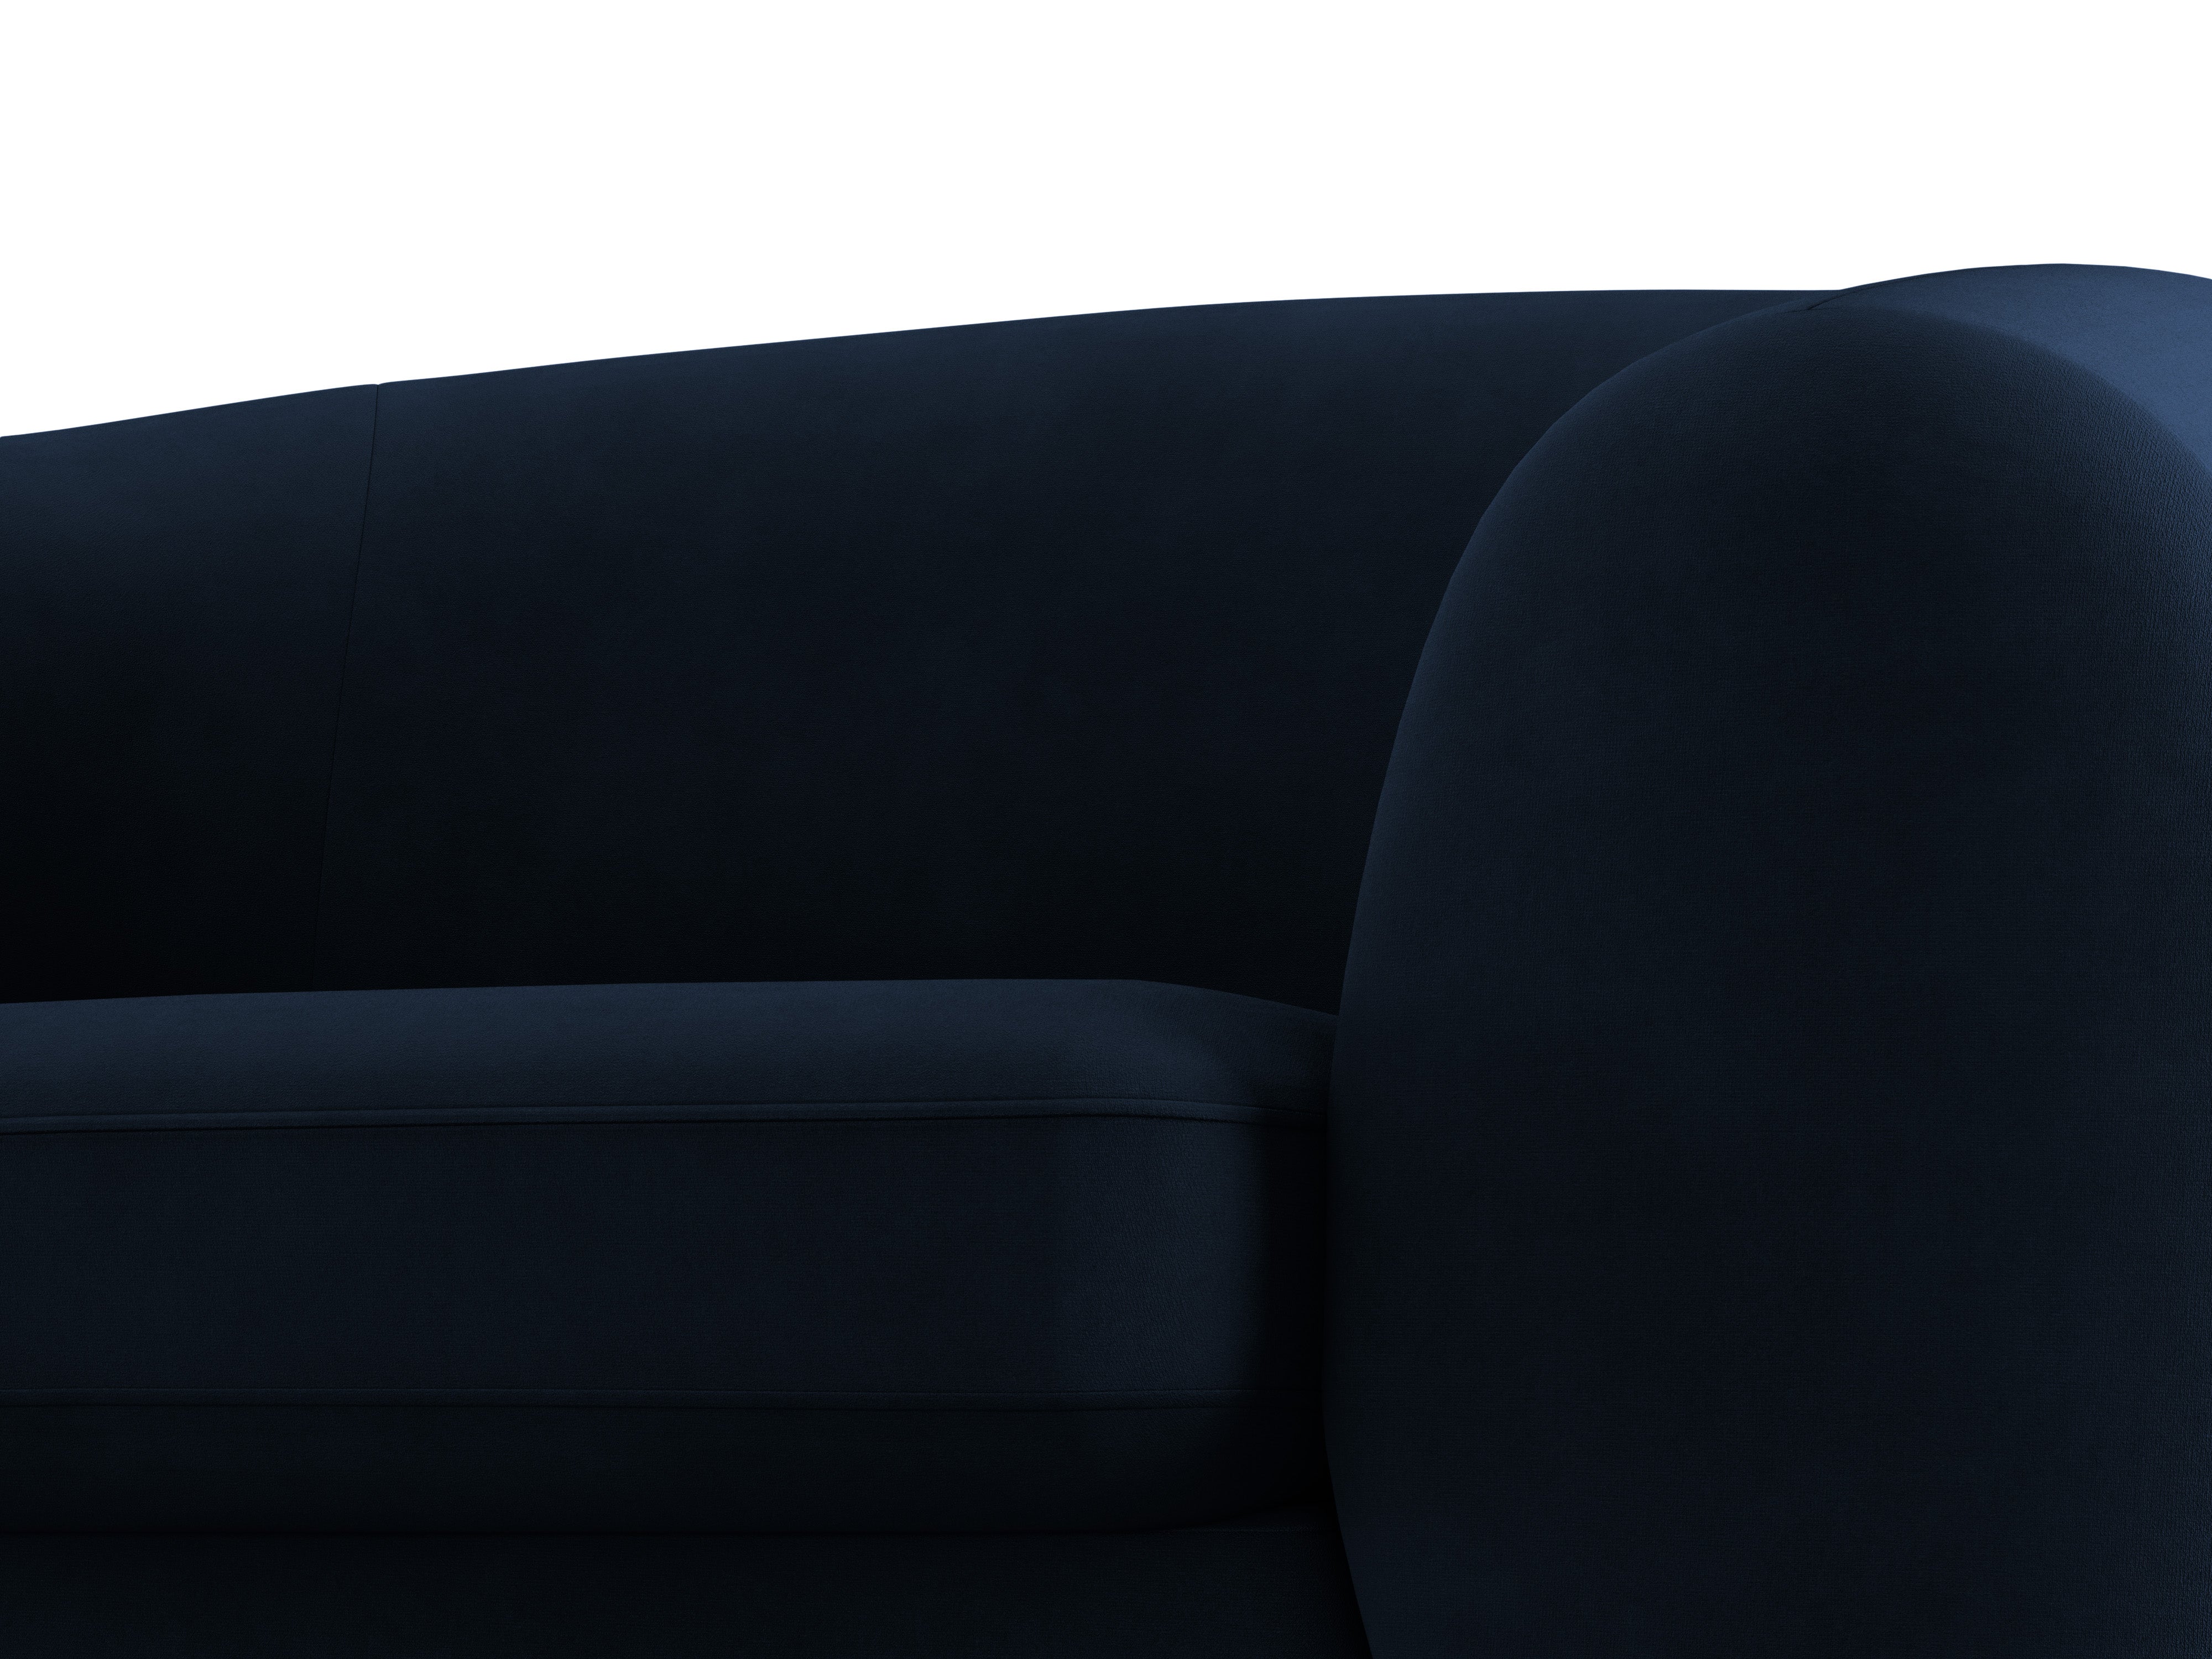 Sofa aksamitna 3-osobowa ELARA granatowy, Windsor & Co, Eye on Design